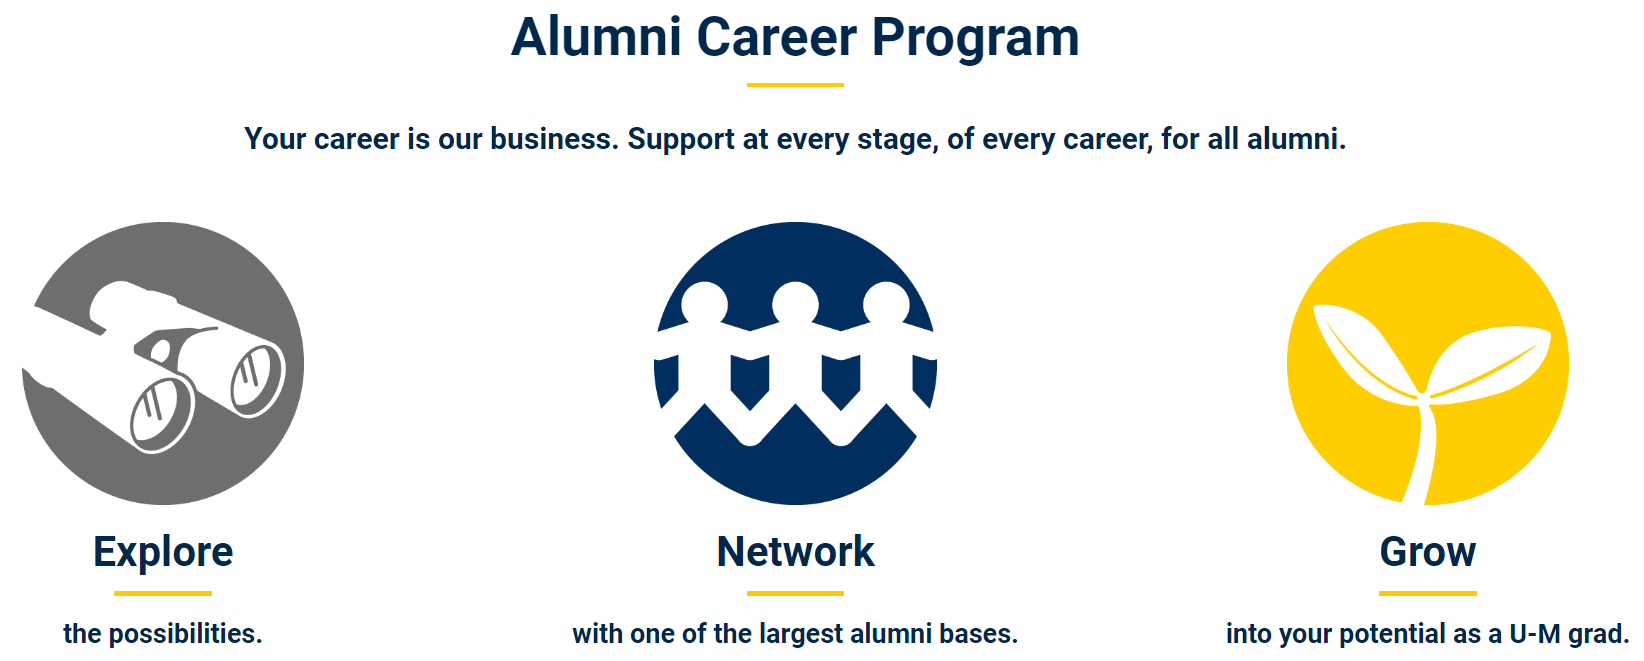 Alumni Career Program